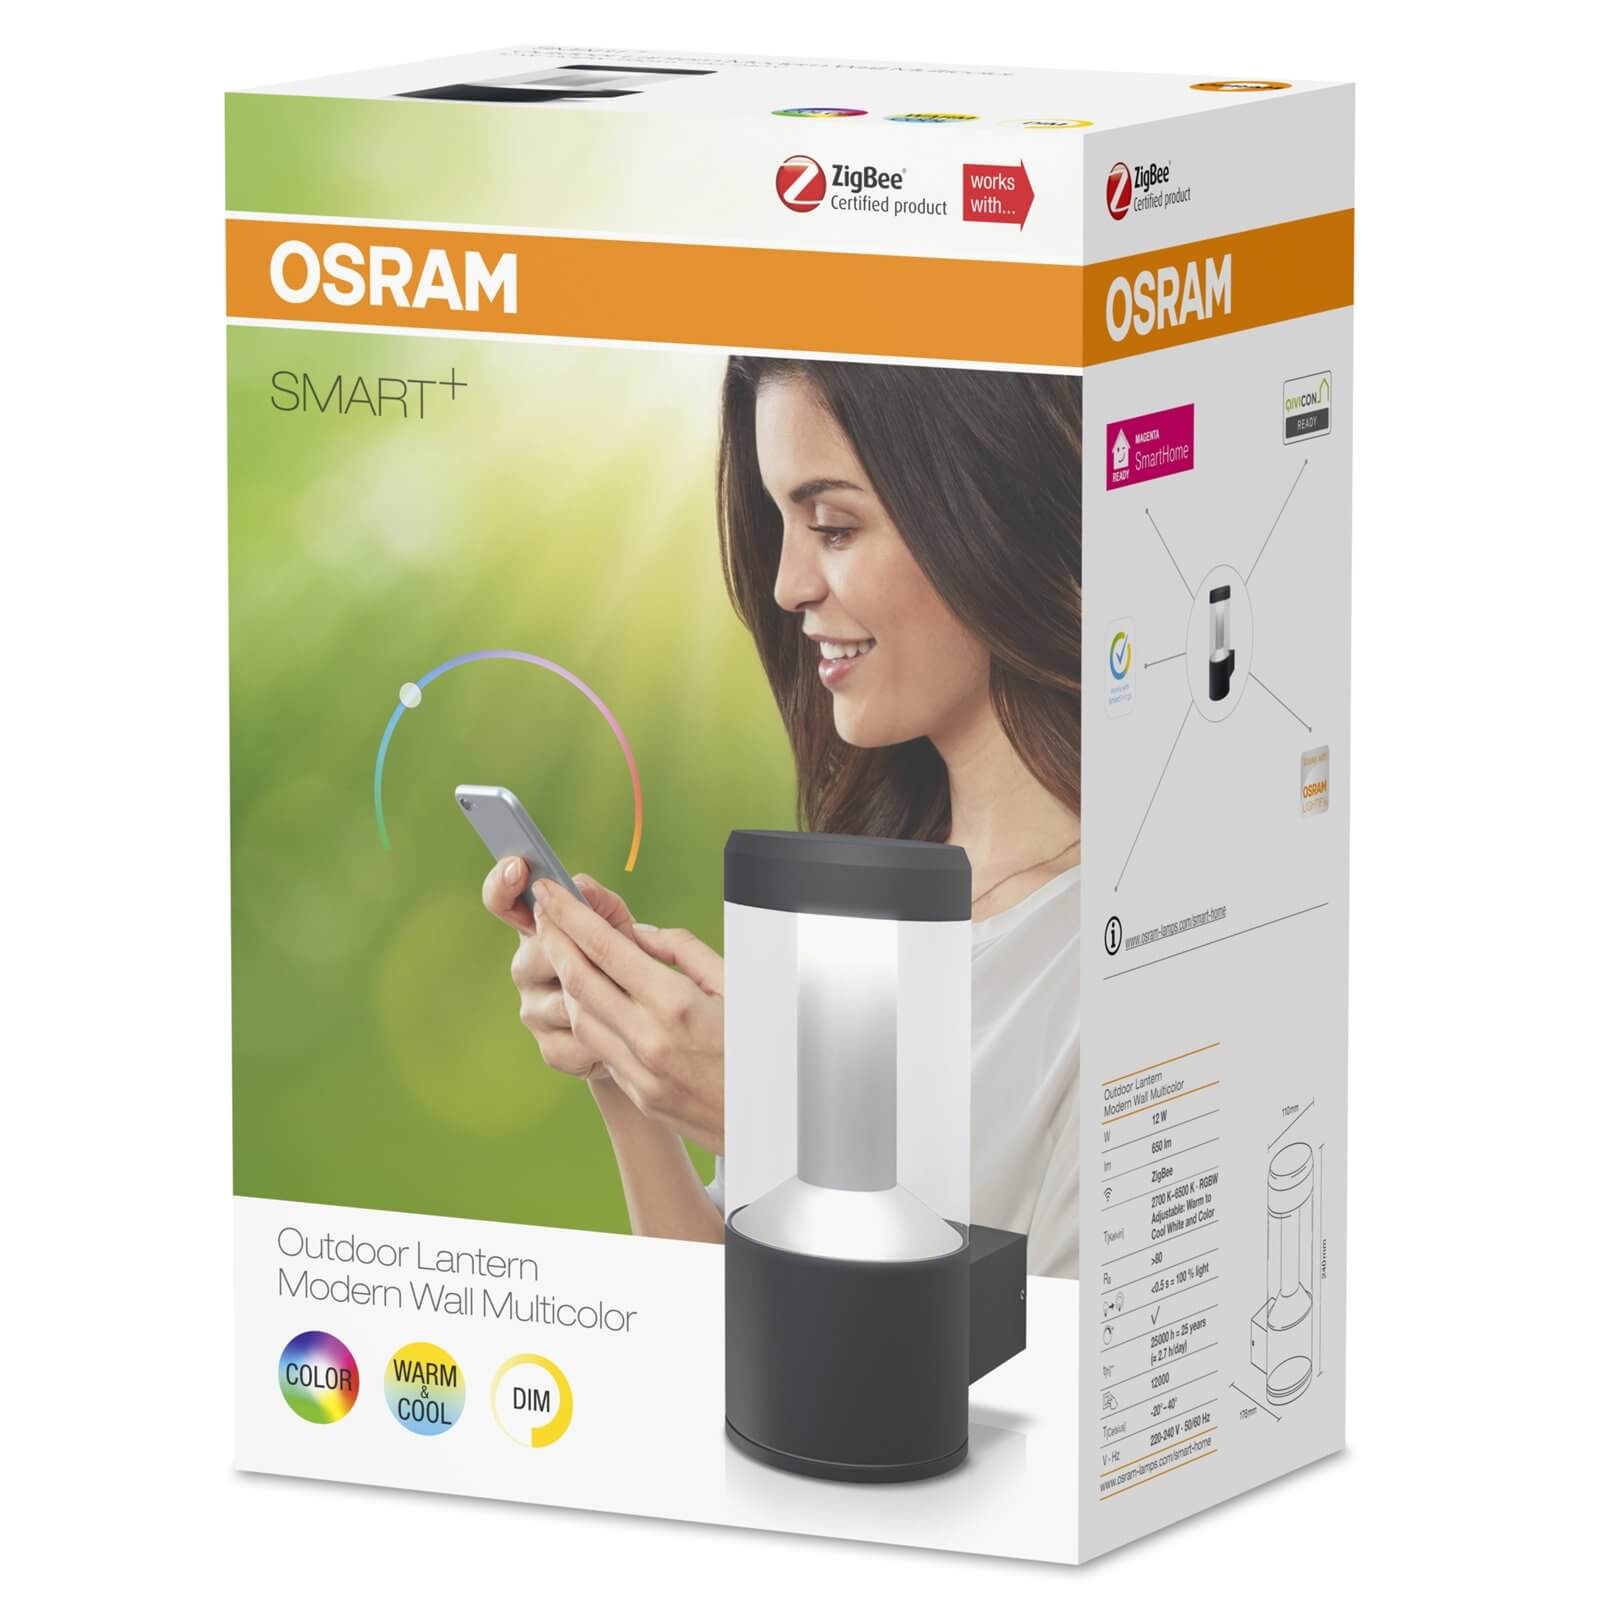 Osram Smart+ Outdoor Lantern Wall Light Bulb